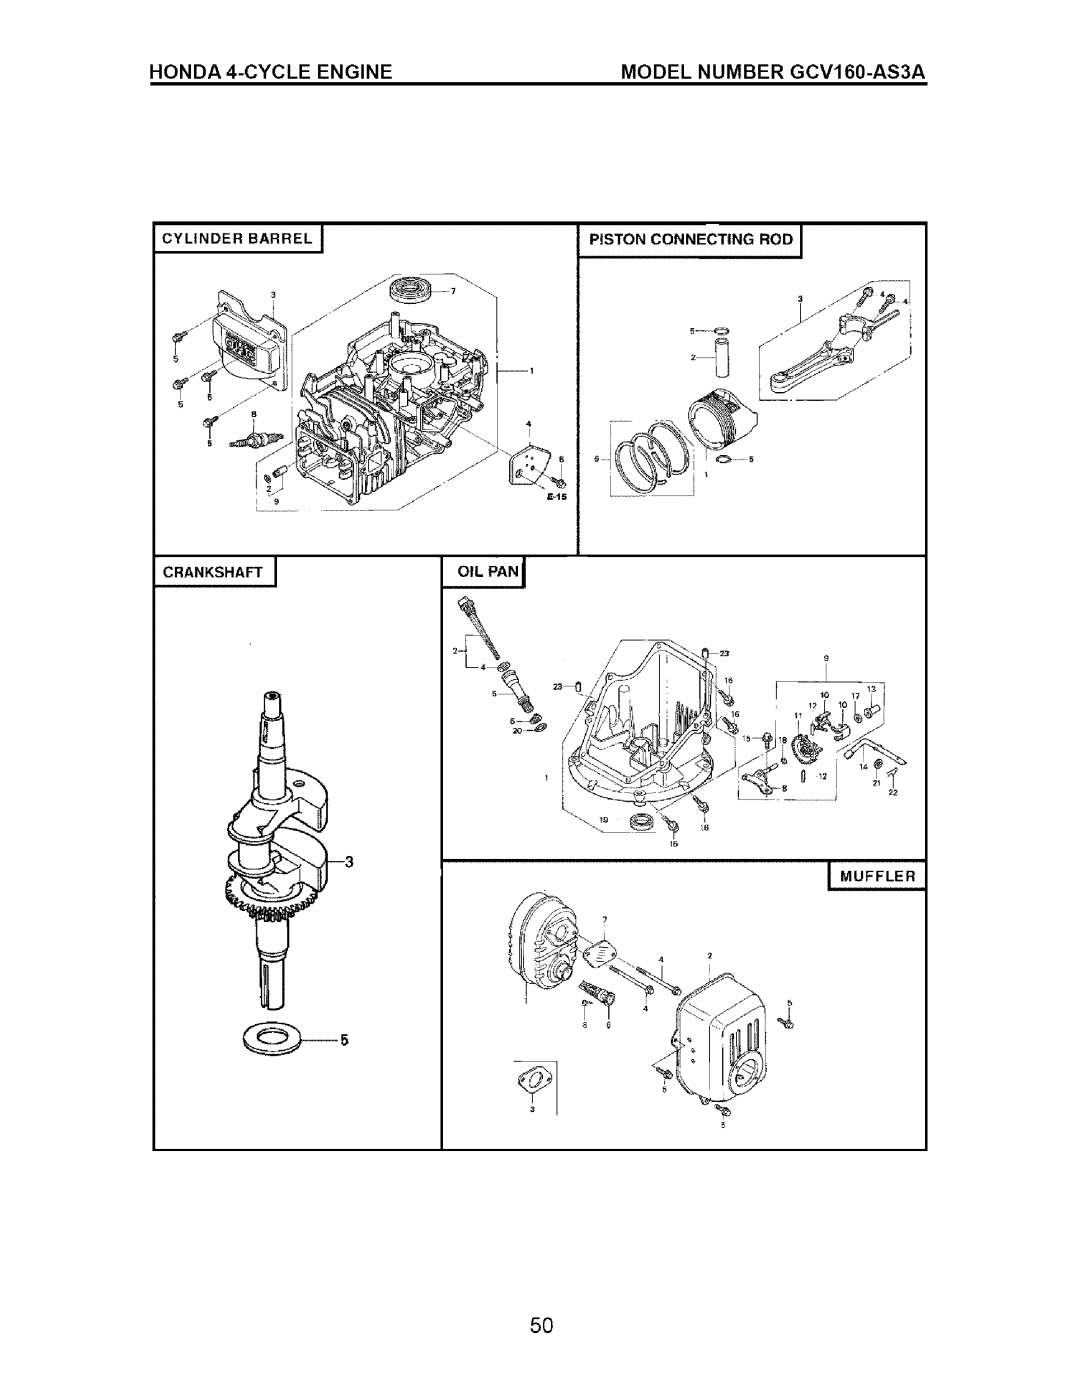 Craftsman 917.37181 HONDA 4-CYCLE ENGINE, MODEL NUMBER GCV160-AS3A, Piston Connecting Rod J, Oil Panj, Crankshaft J 